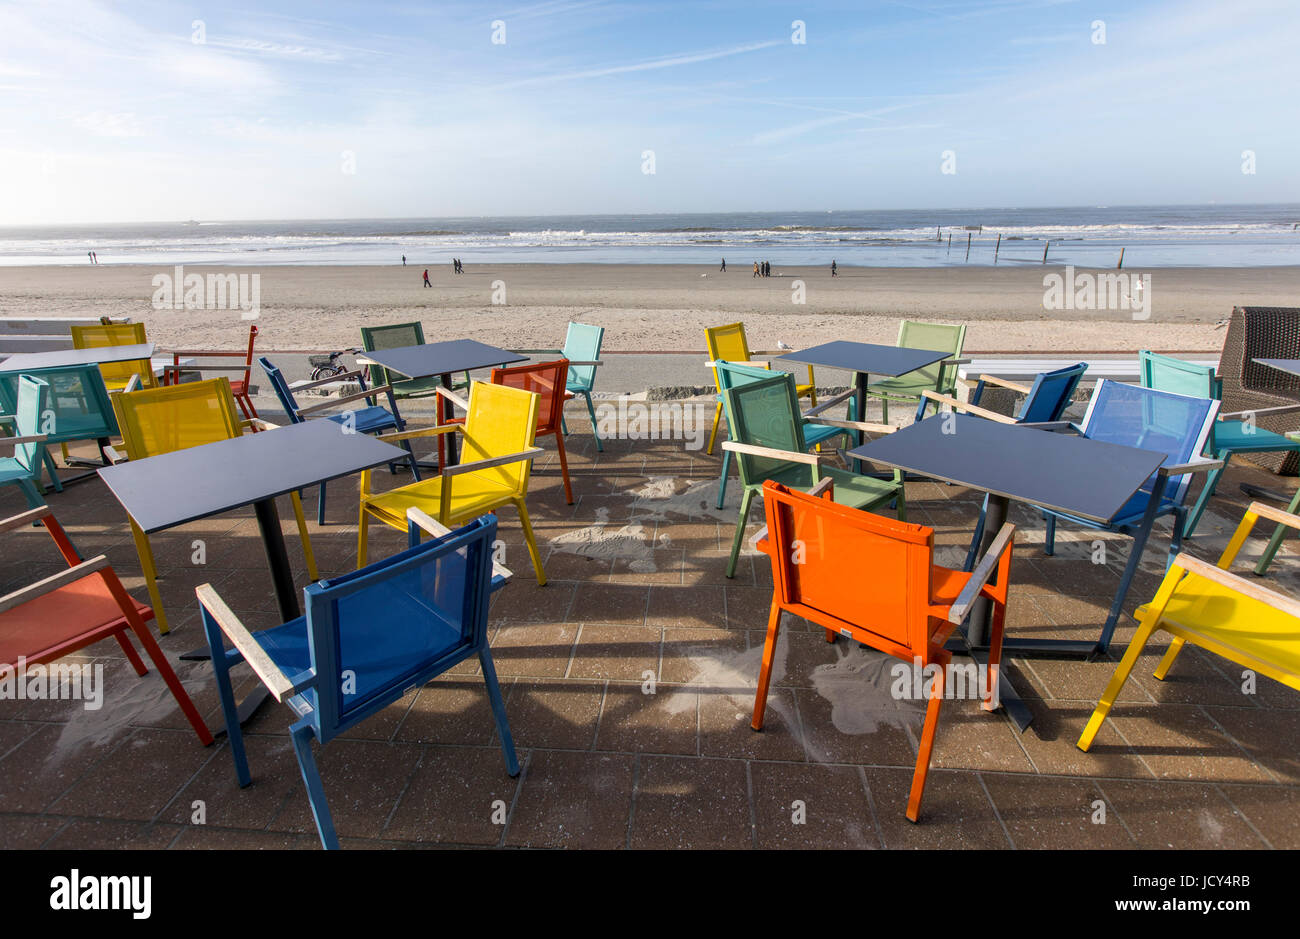 North Sea island, Norderney, East Frisia, Germany, beach promenade,  cafe, beach bar, Stock Photo